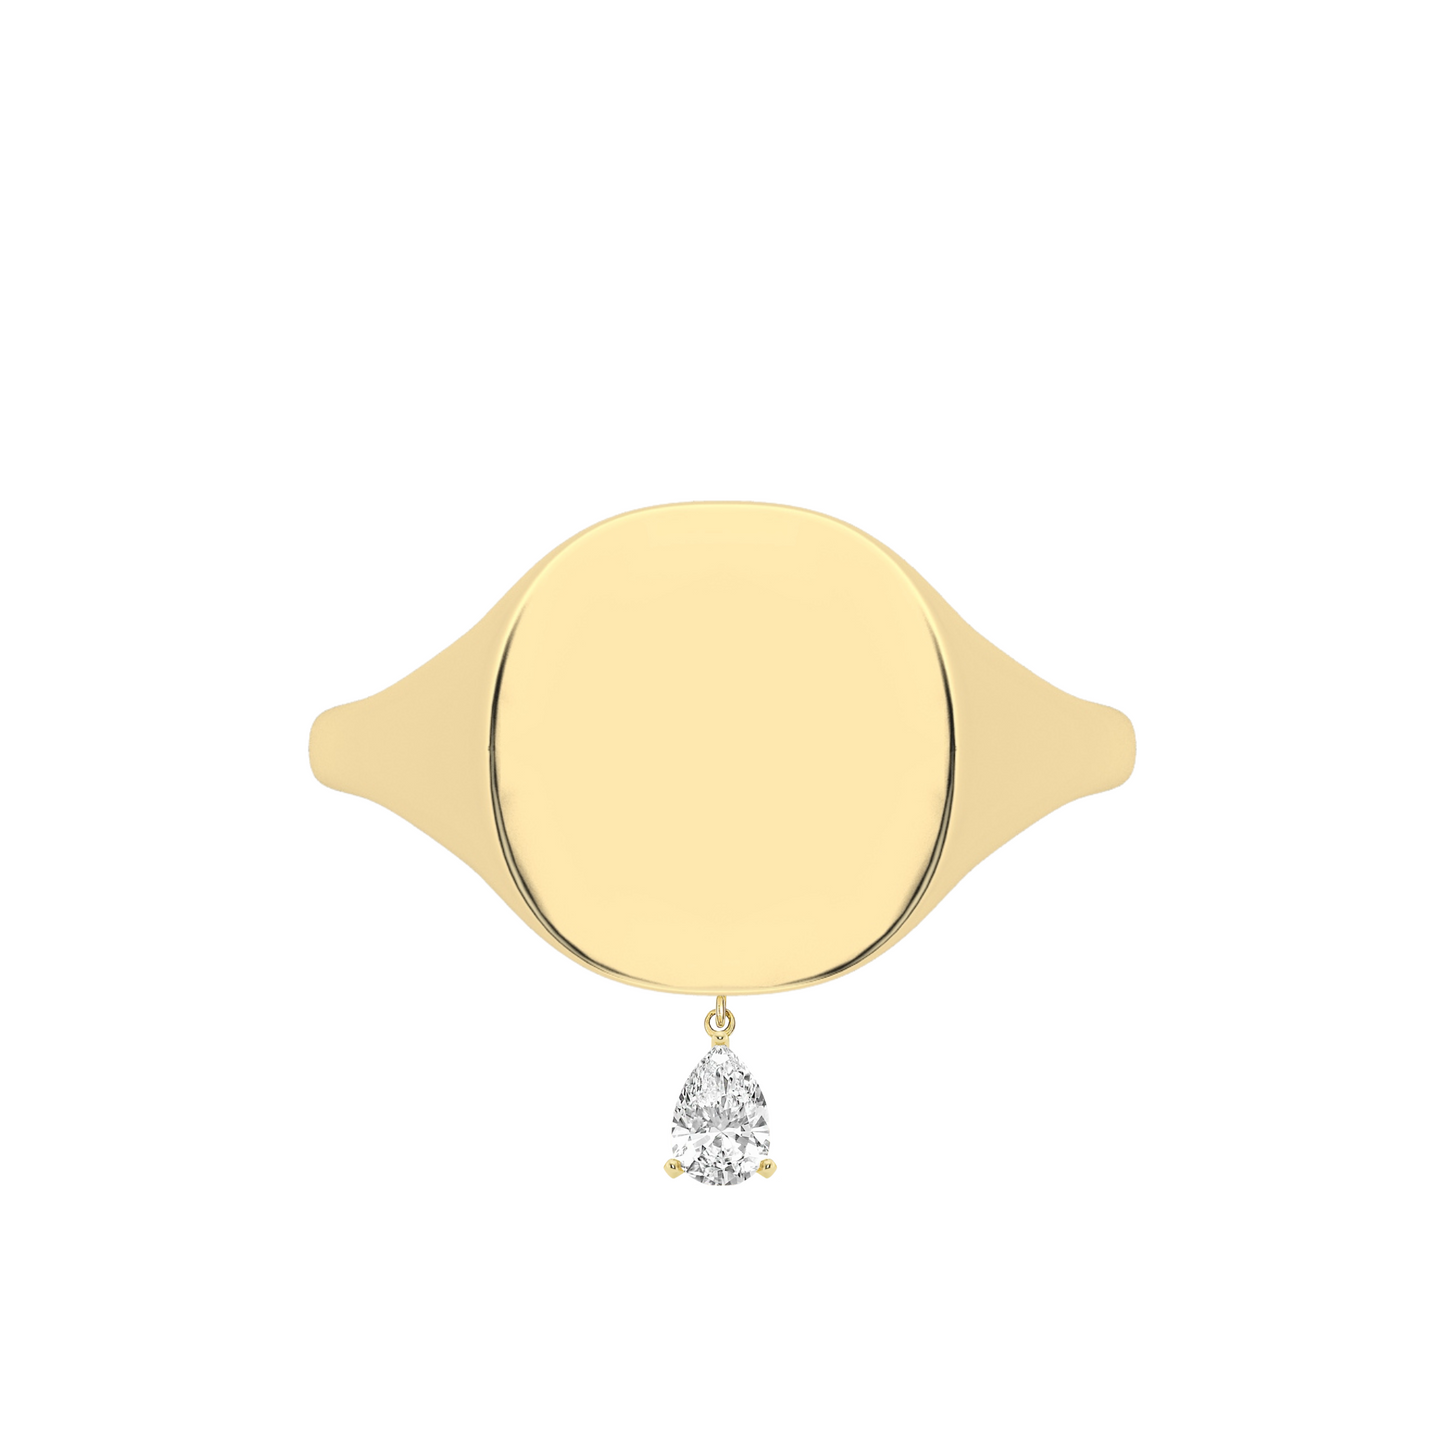 The Franca Pendulum Pear Diamond Ring